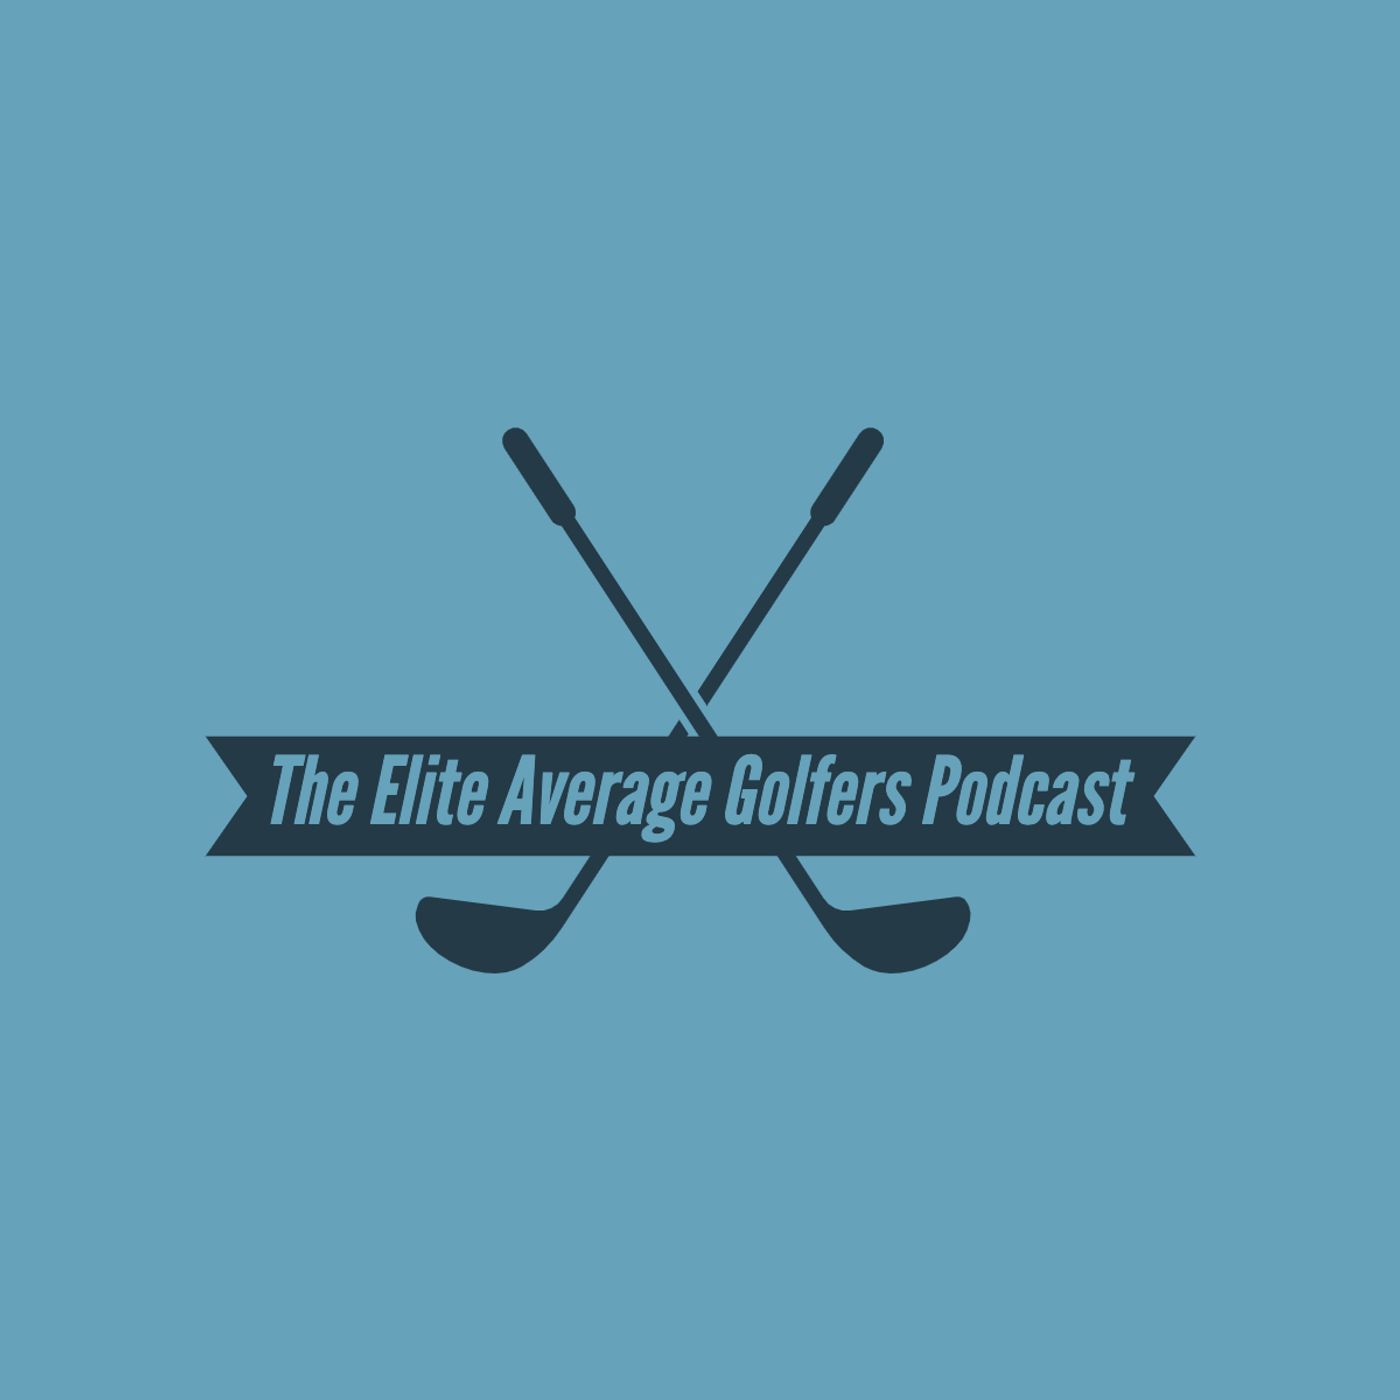 The Elite Average Golfers Podcast